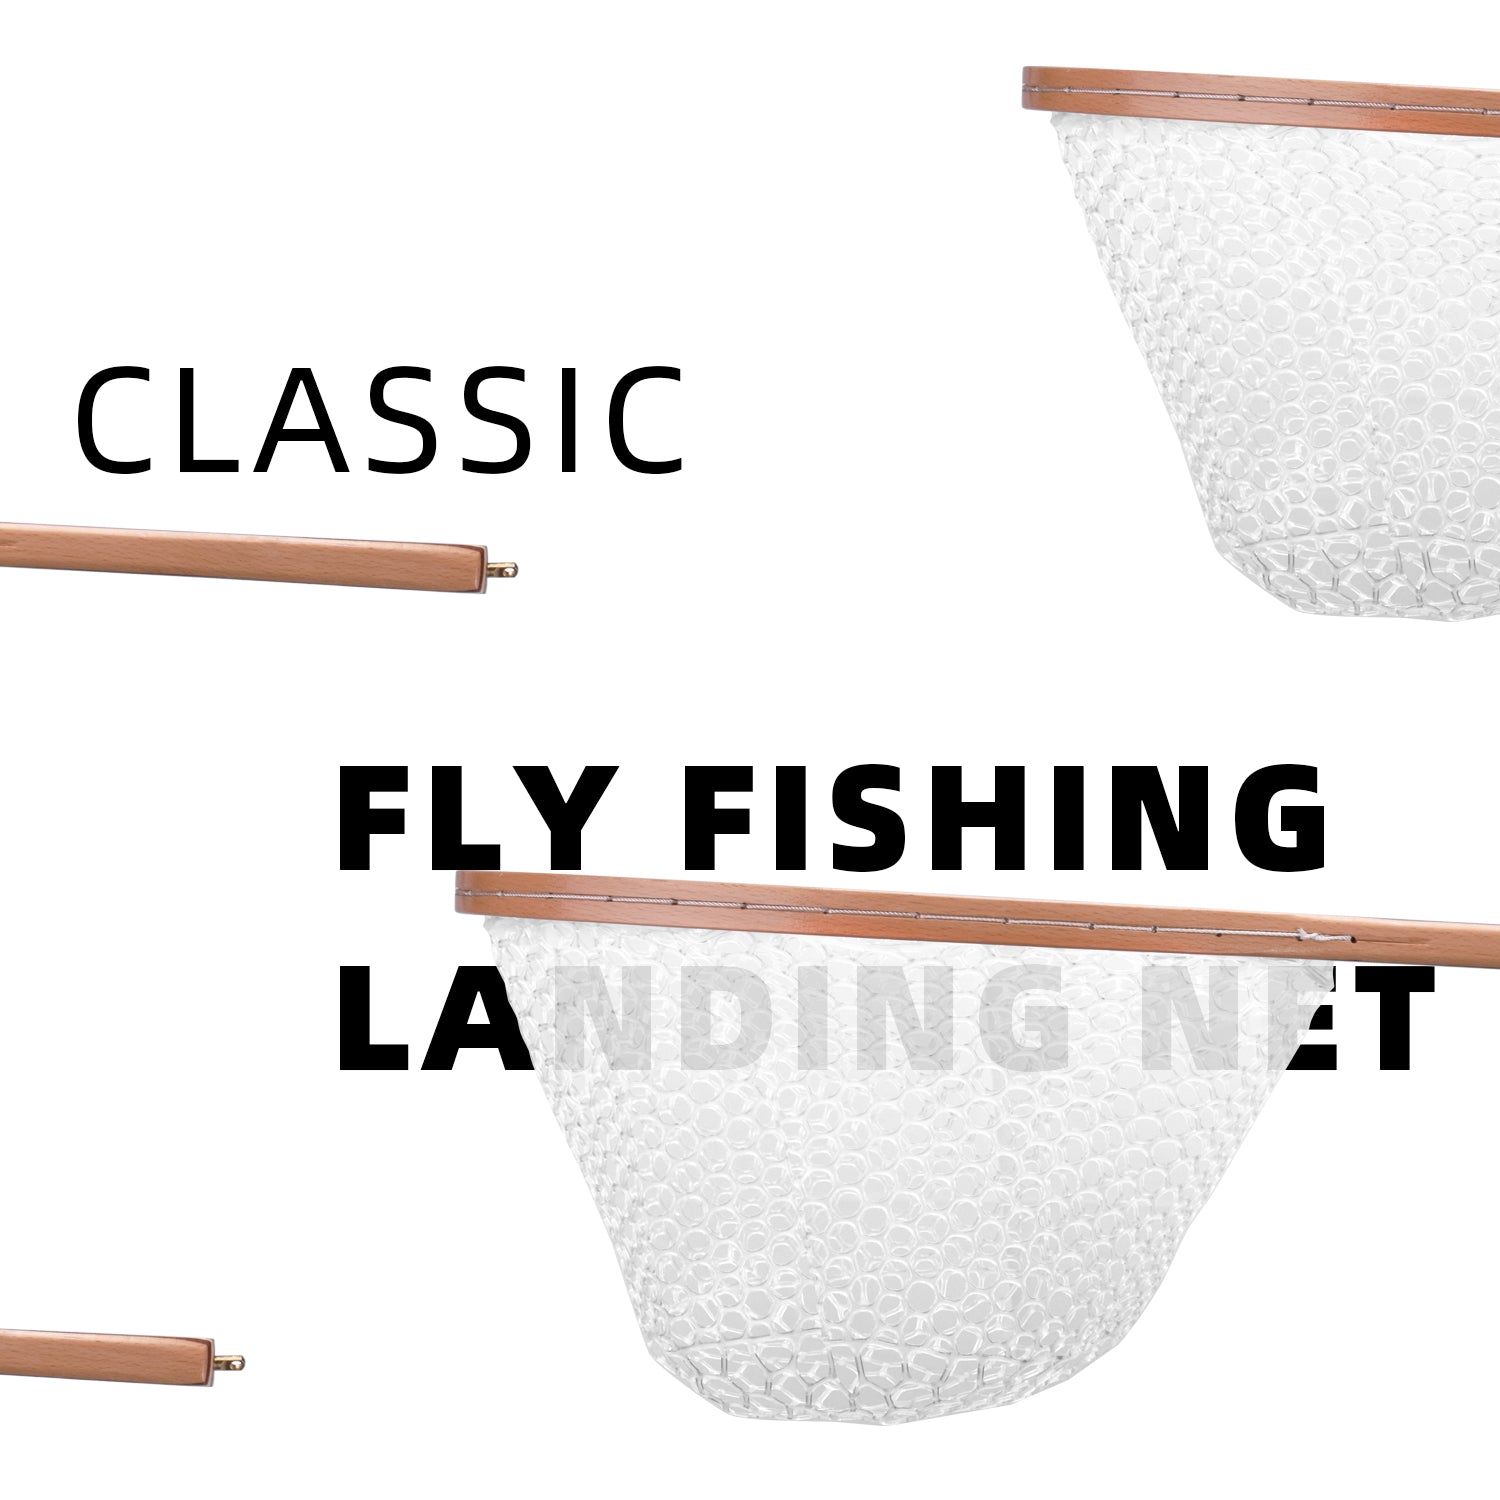 Kylebooker FN006 Fly Fishing Landing Net Wooden Frame Soft Rubber Mesh Trout Bass Catch and Release Net